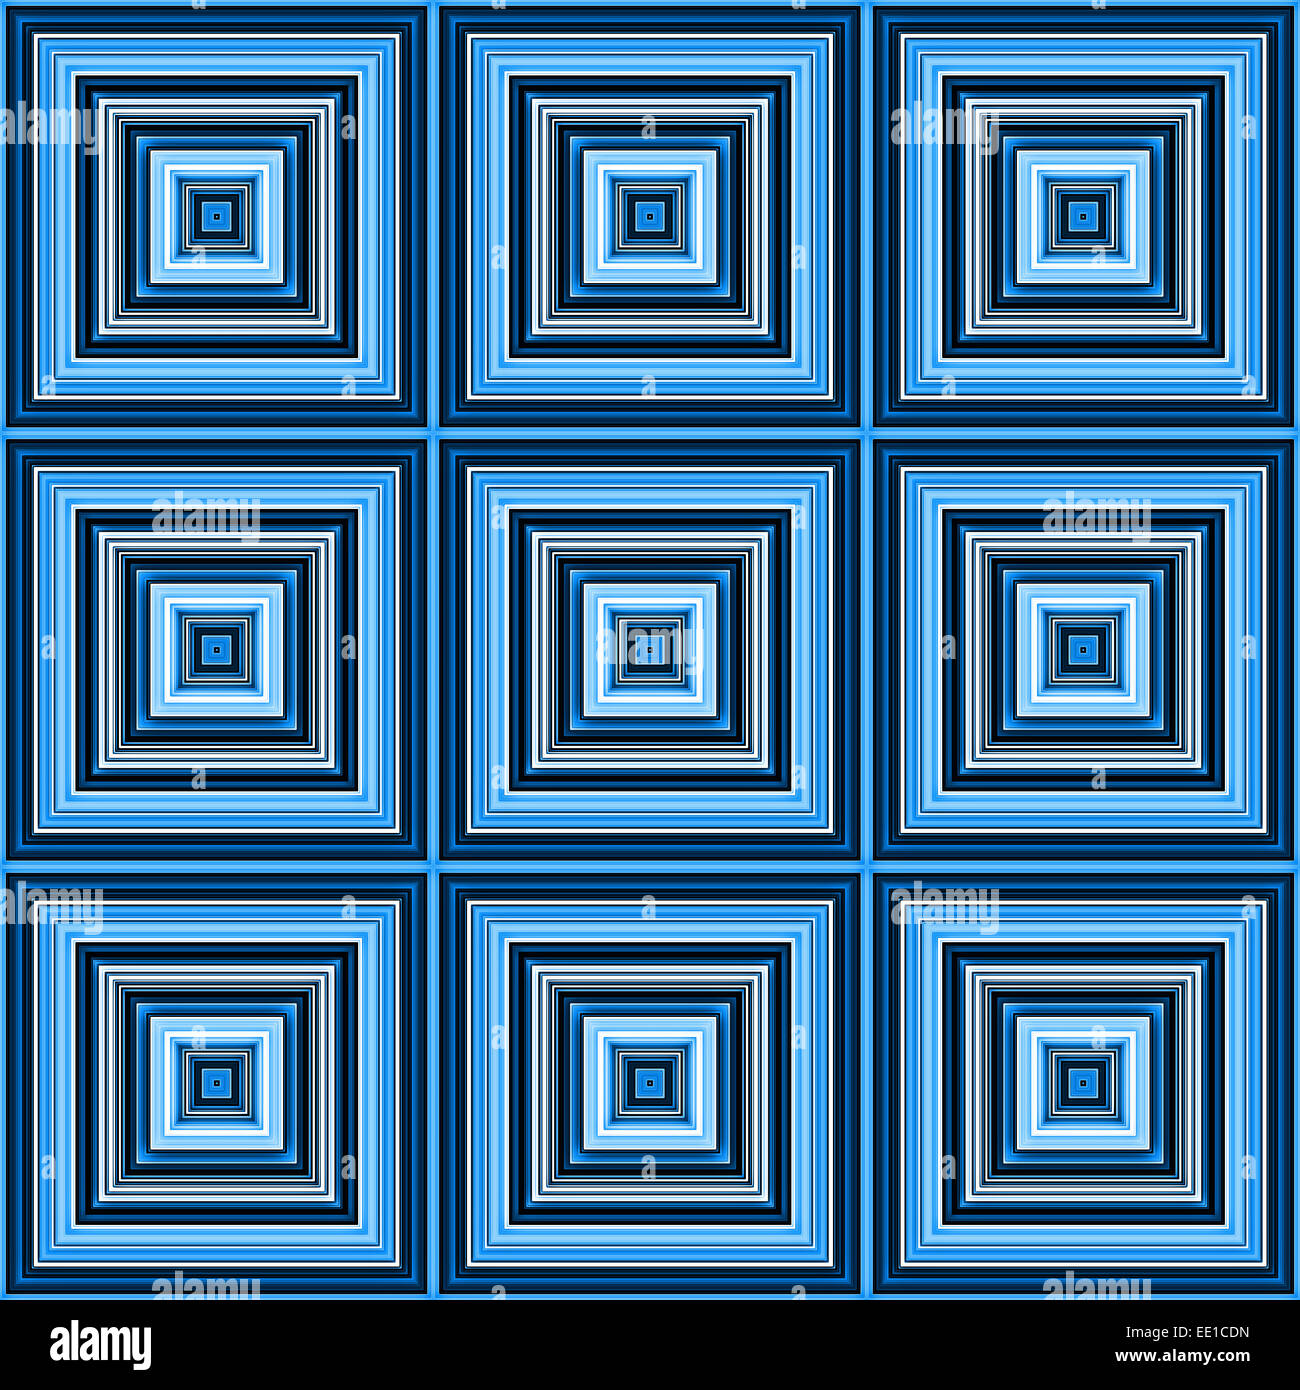 Blue colour square tiles seamless illustration. Stock Photo